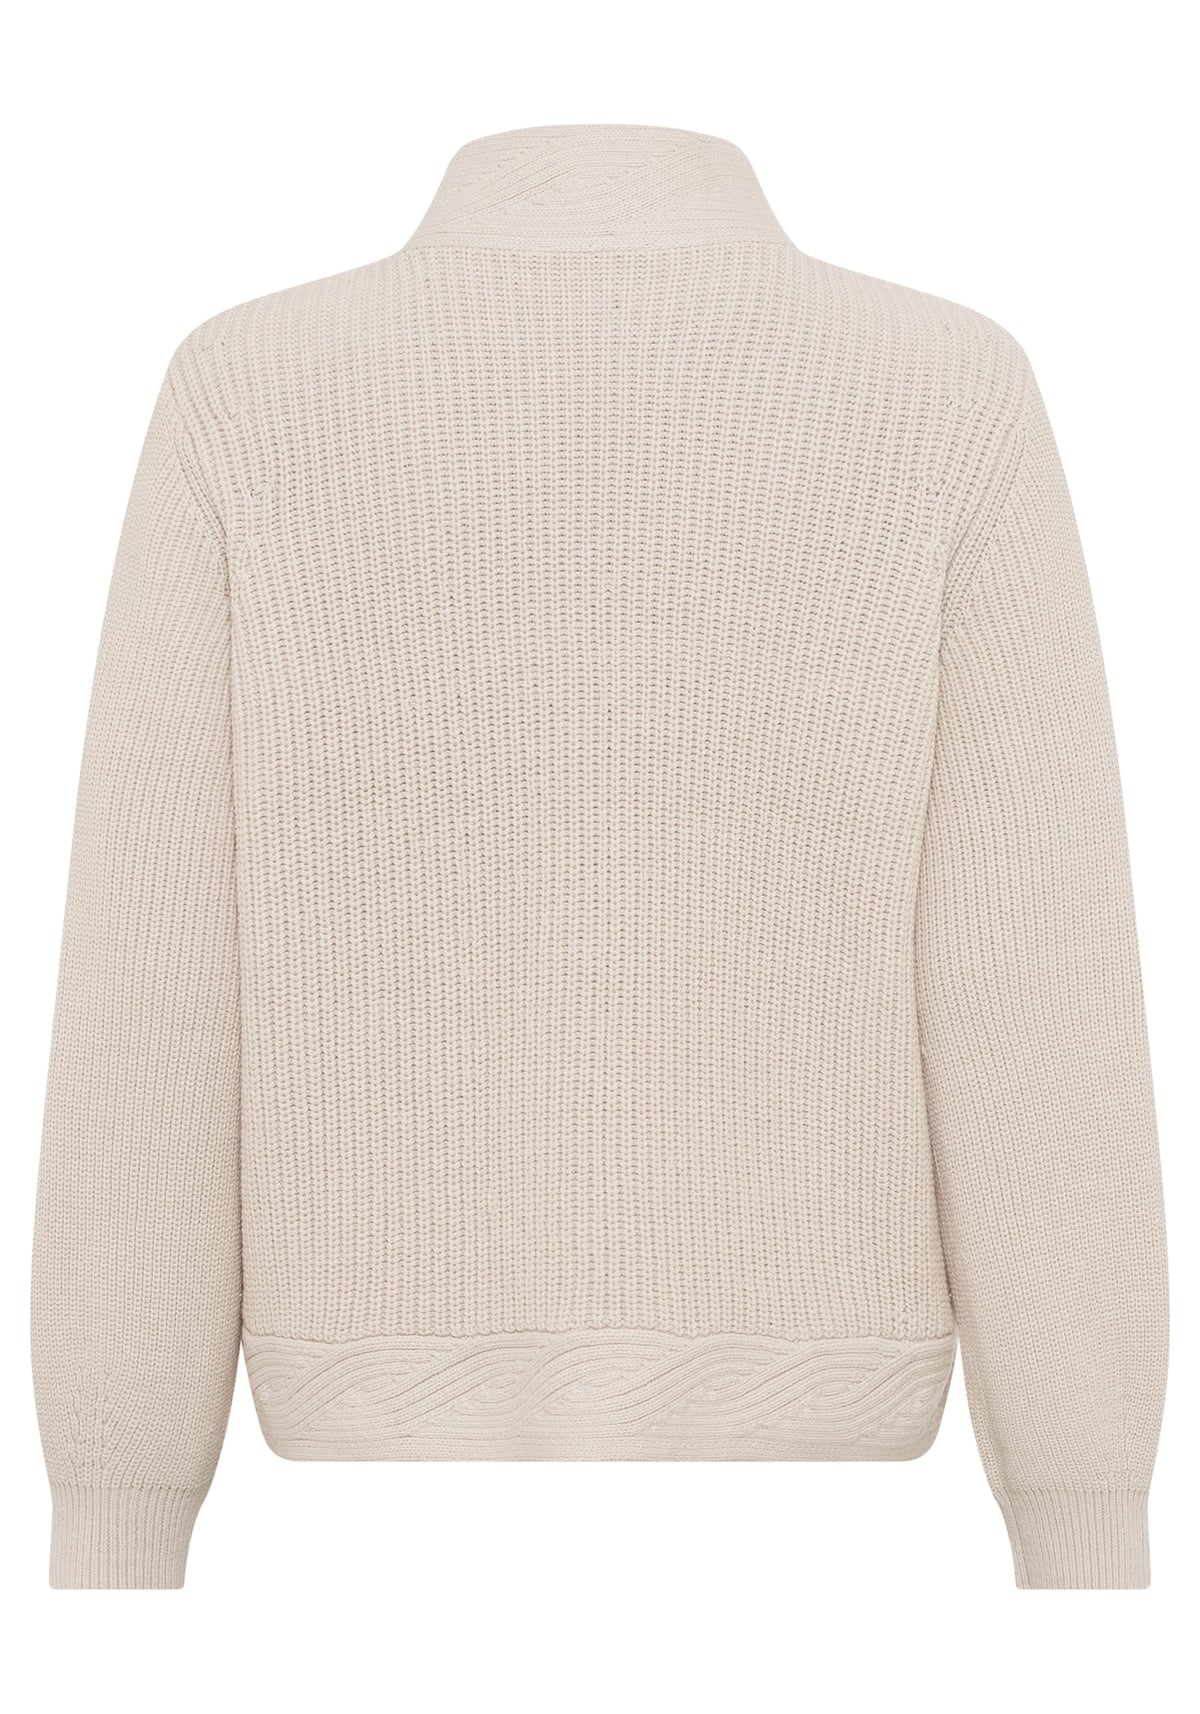 Cotton Blend Long Sleeve Mixed Media Sweater Jacket